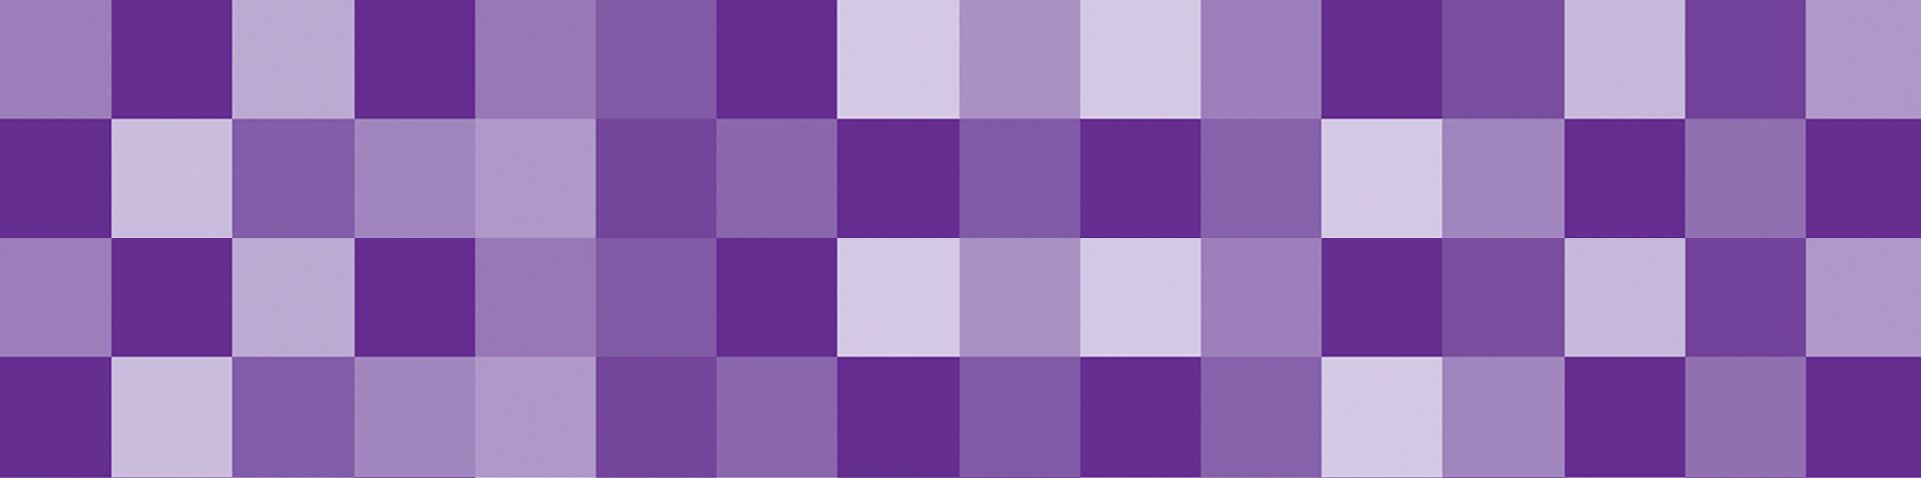 purple square design